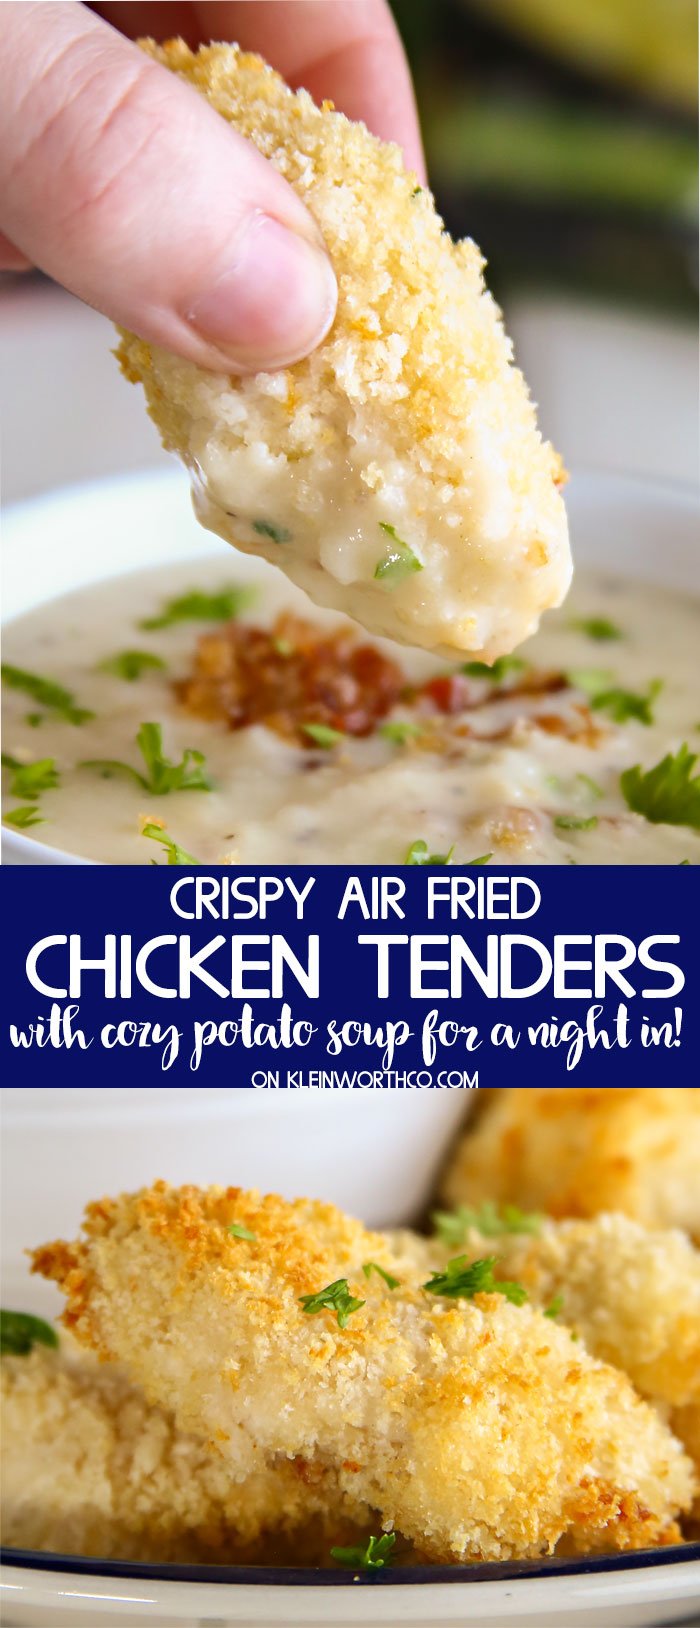 Crispy Chicken Tenders & Potato Soup